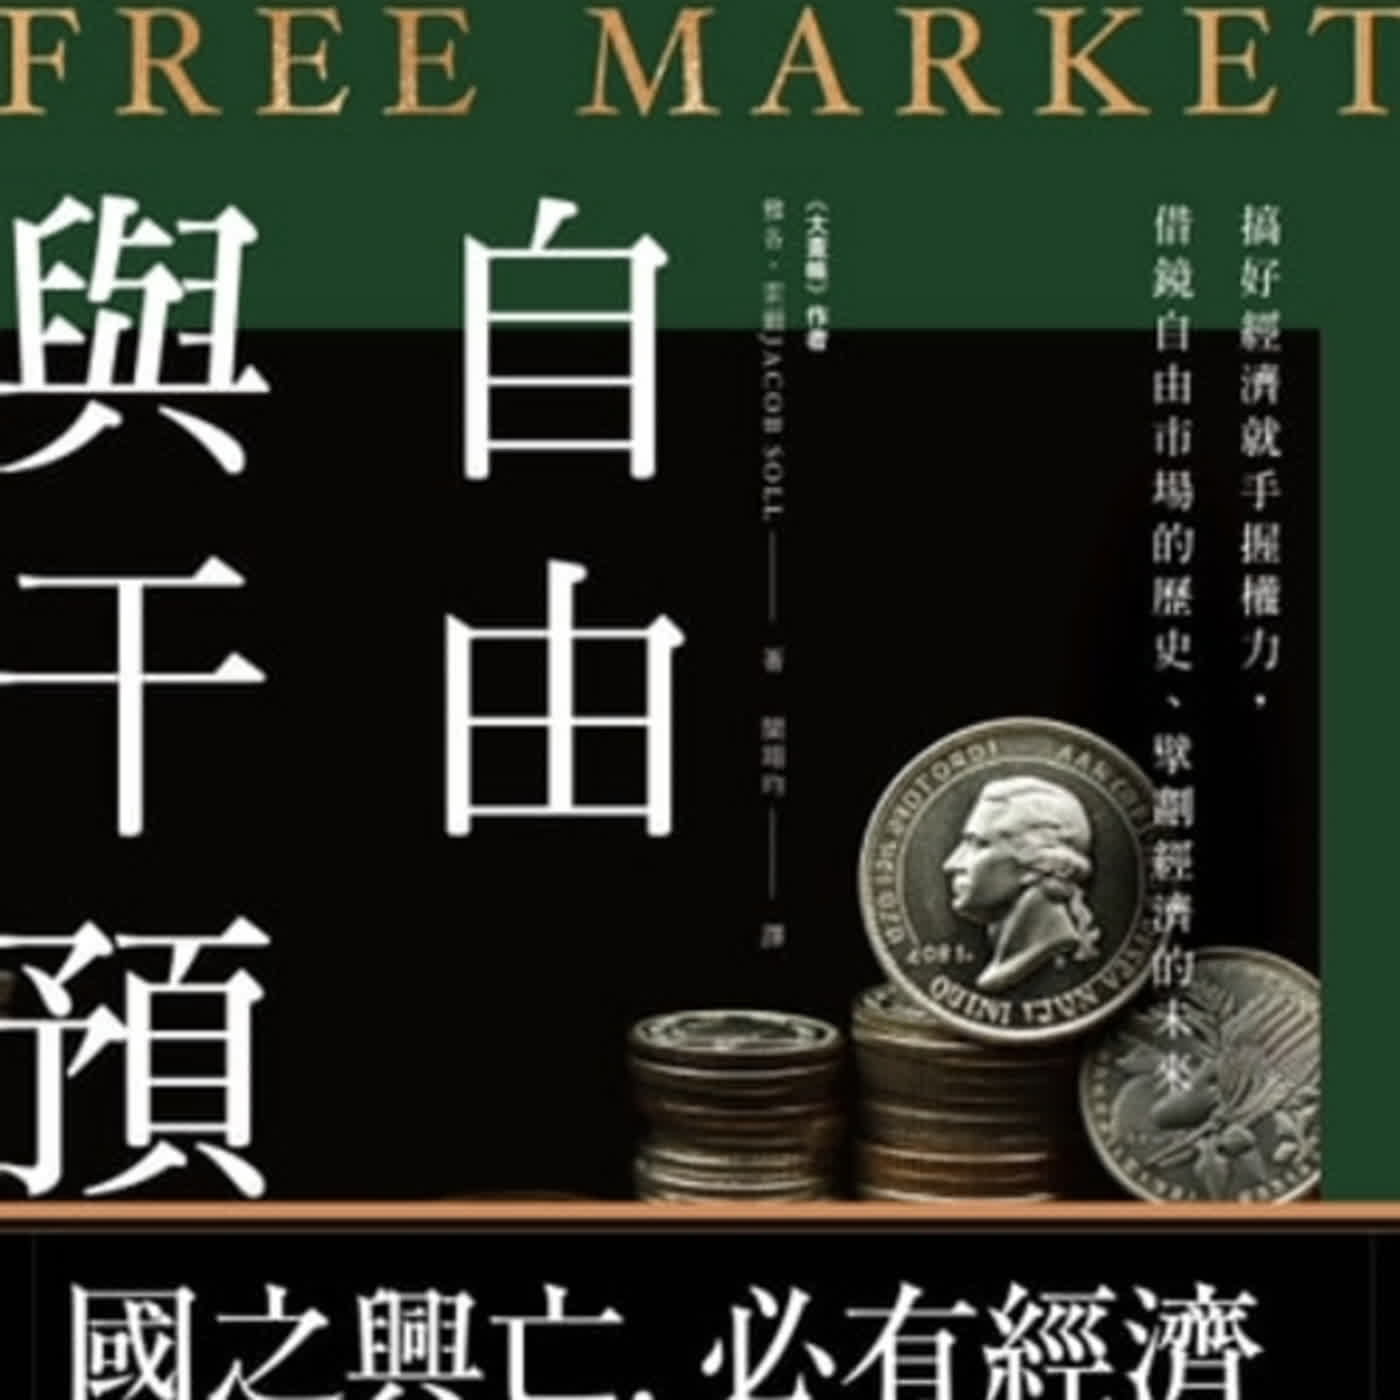 S7Ep.126《自由與干預》: 自由市場經濟是萬靈丹嗎？